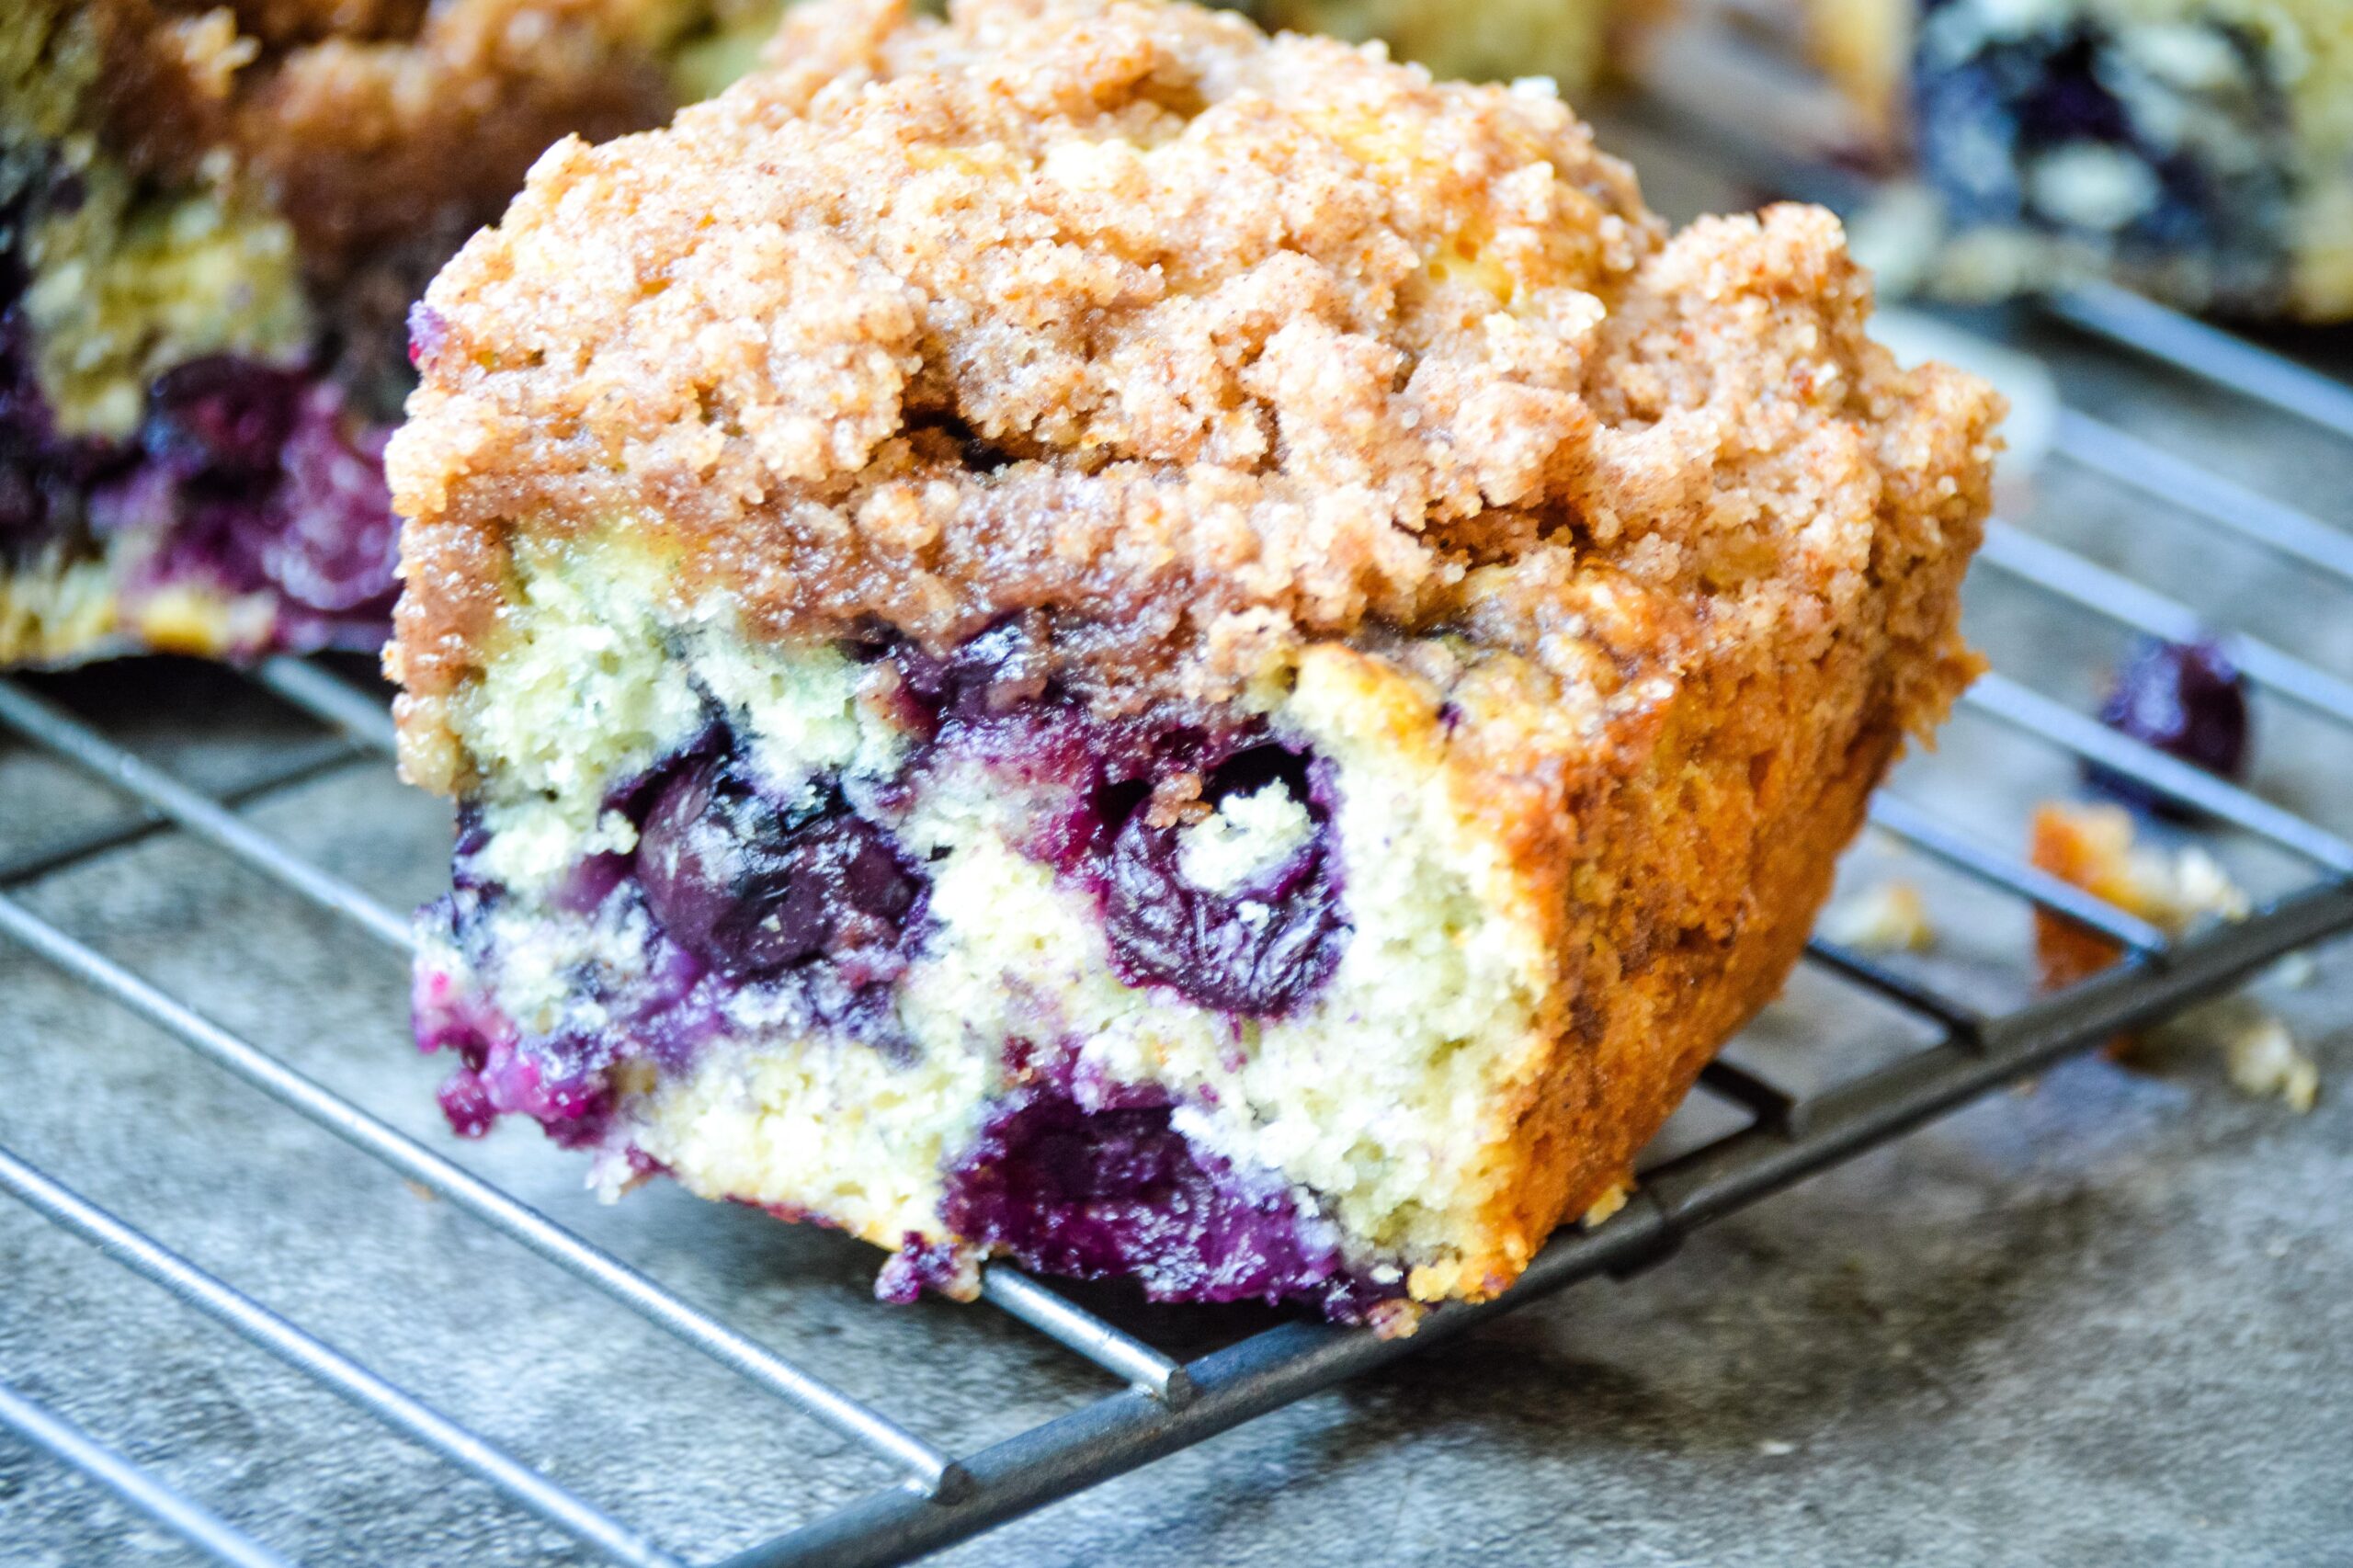  Imagine waking up to the sweet aroma of freshly baked blueberry coffee cake. 😍